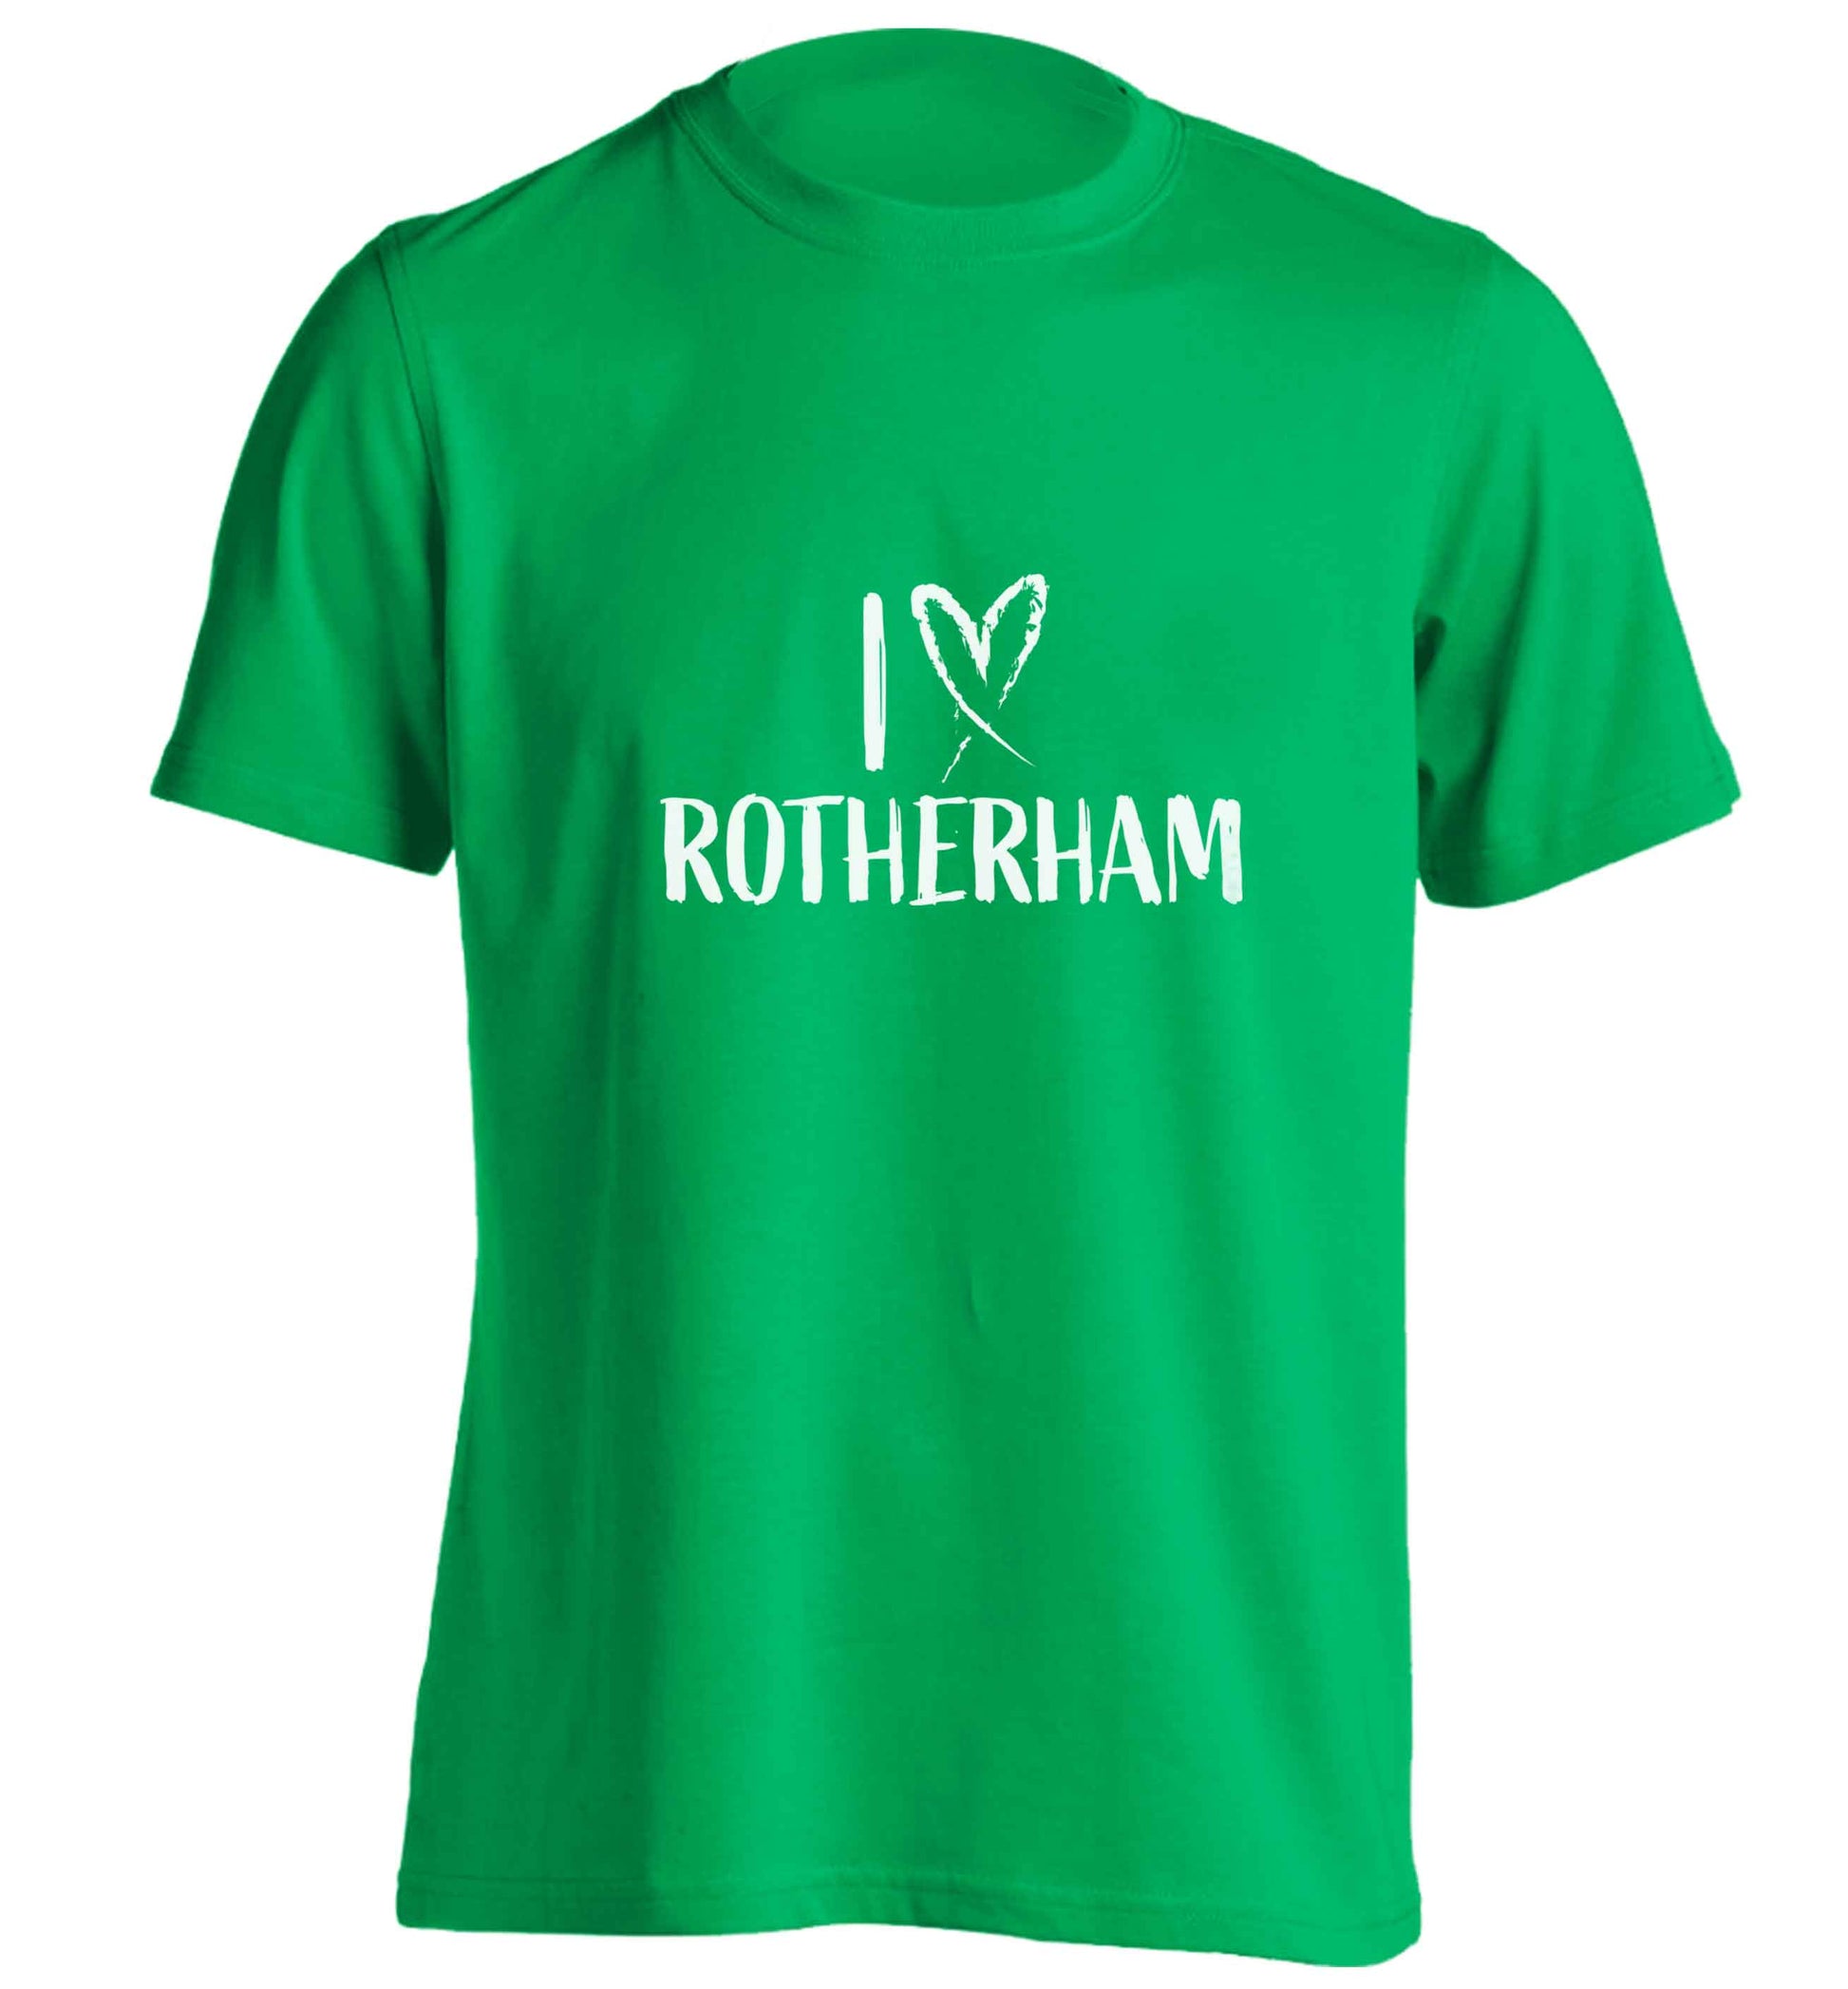 I love Rotherham adults unisex green Tshirt 2XL